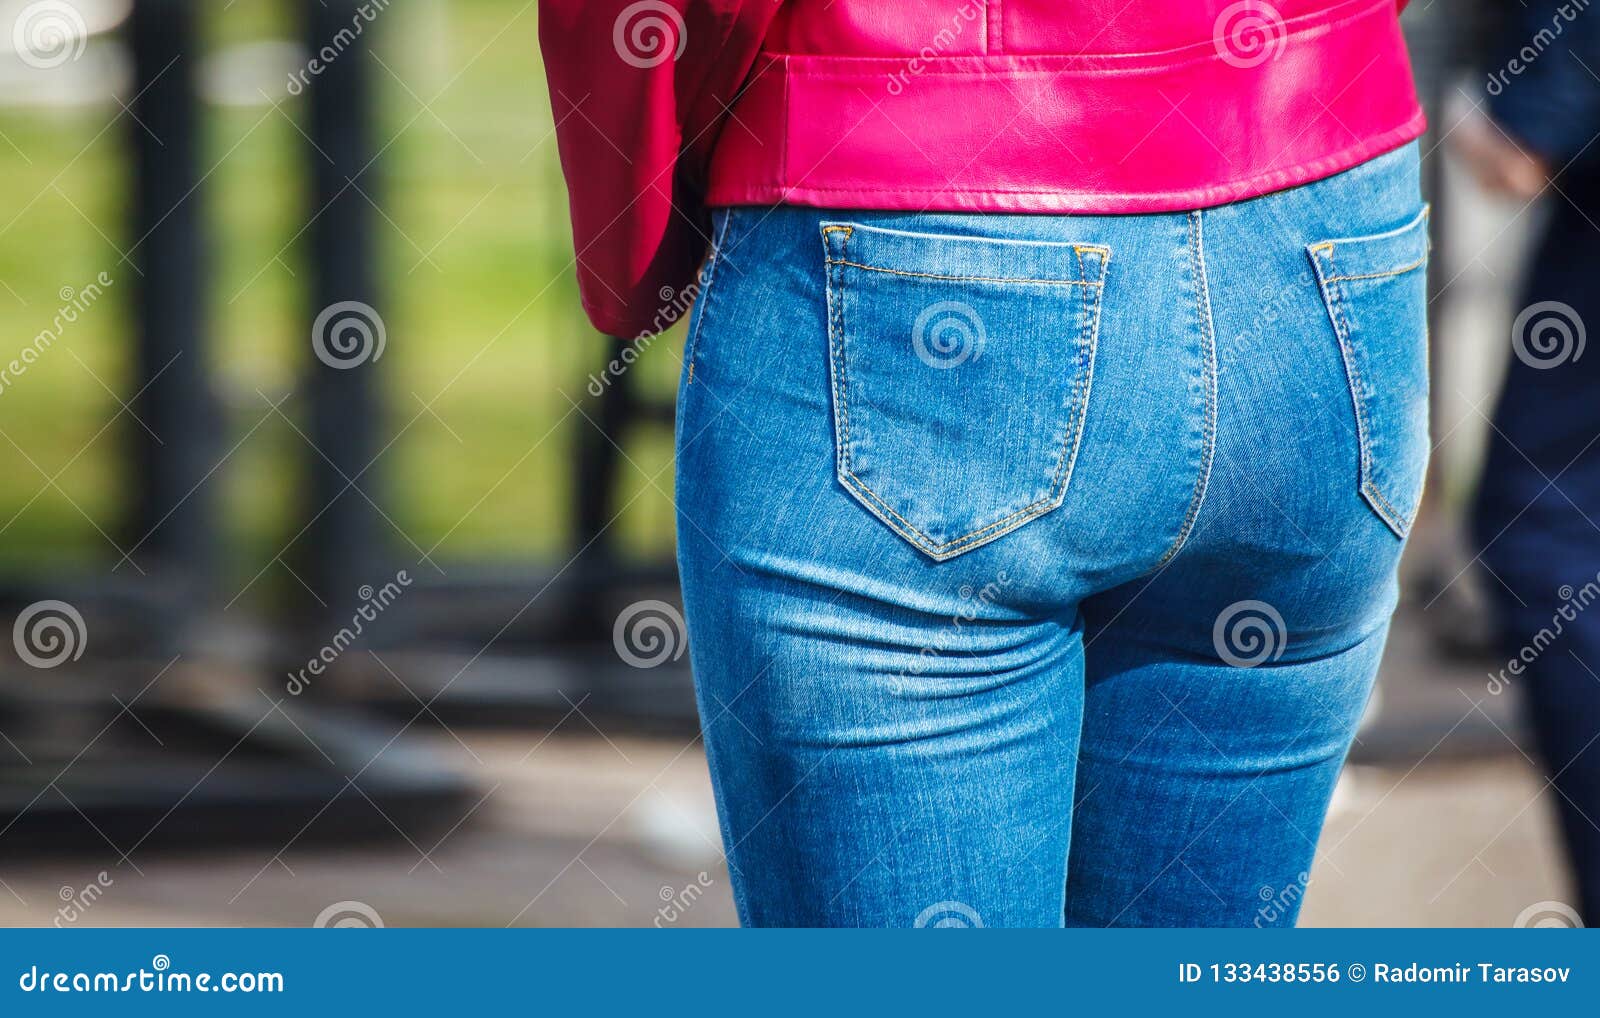 Ladies jeans butt 